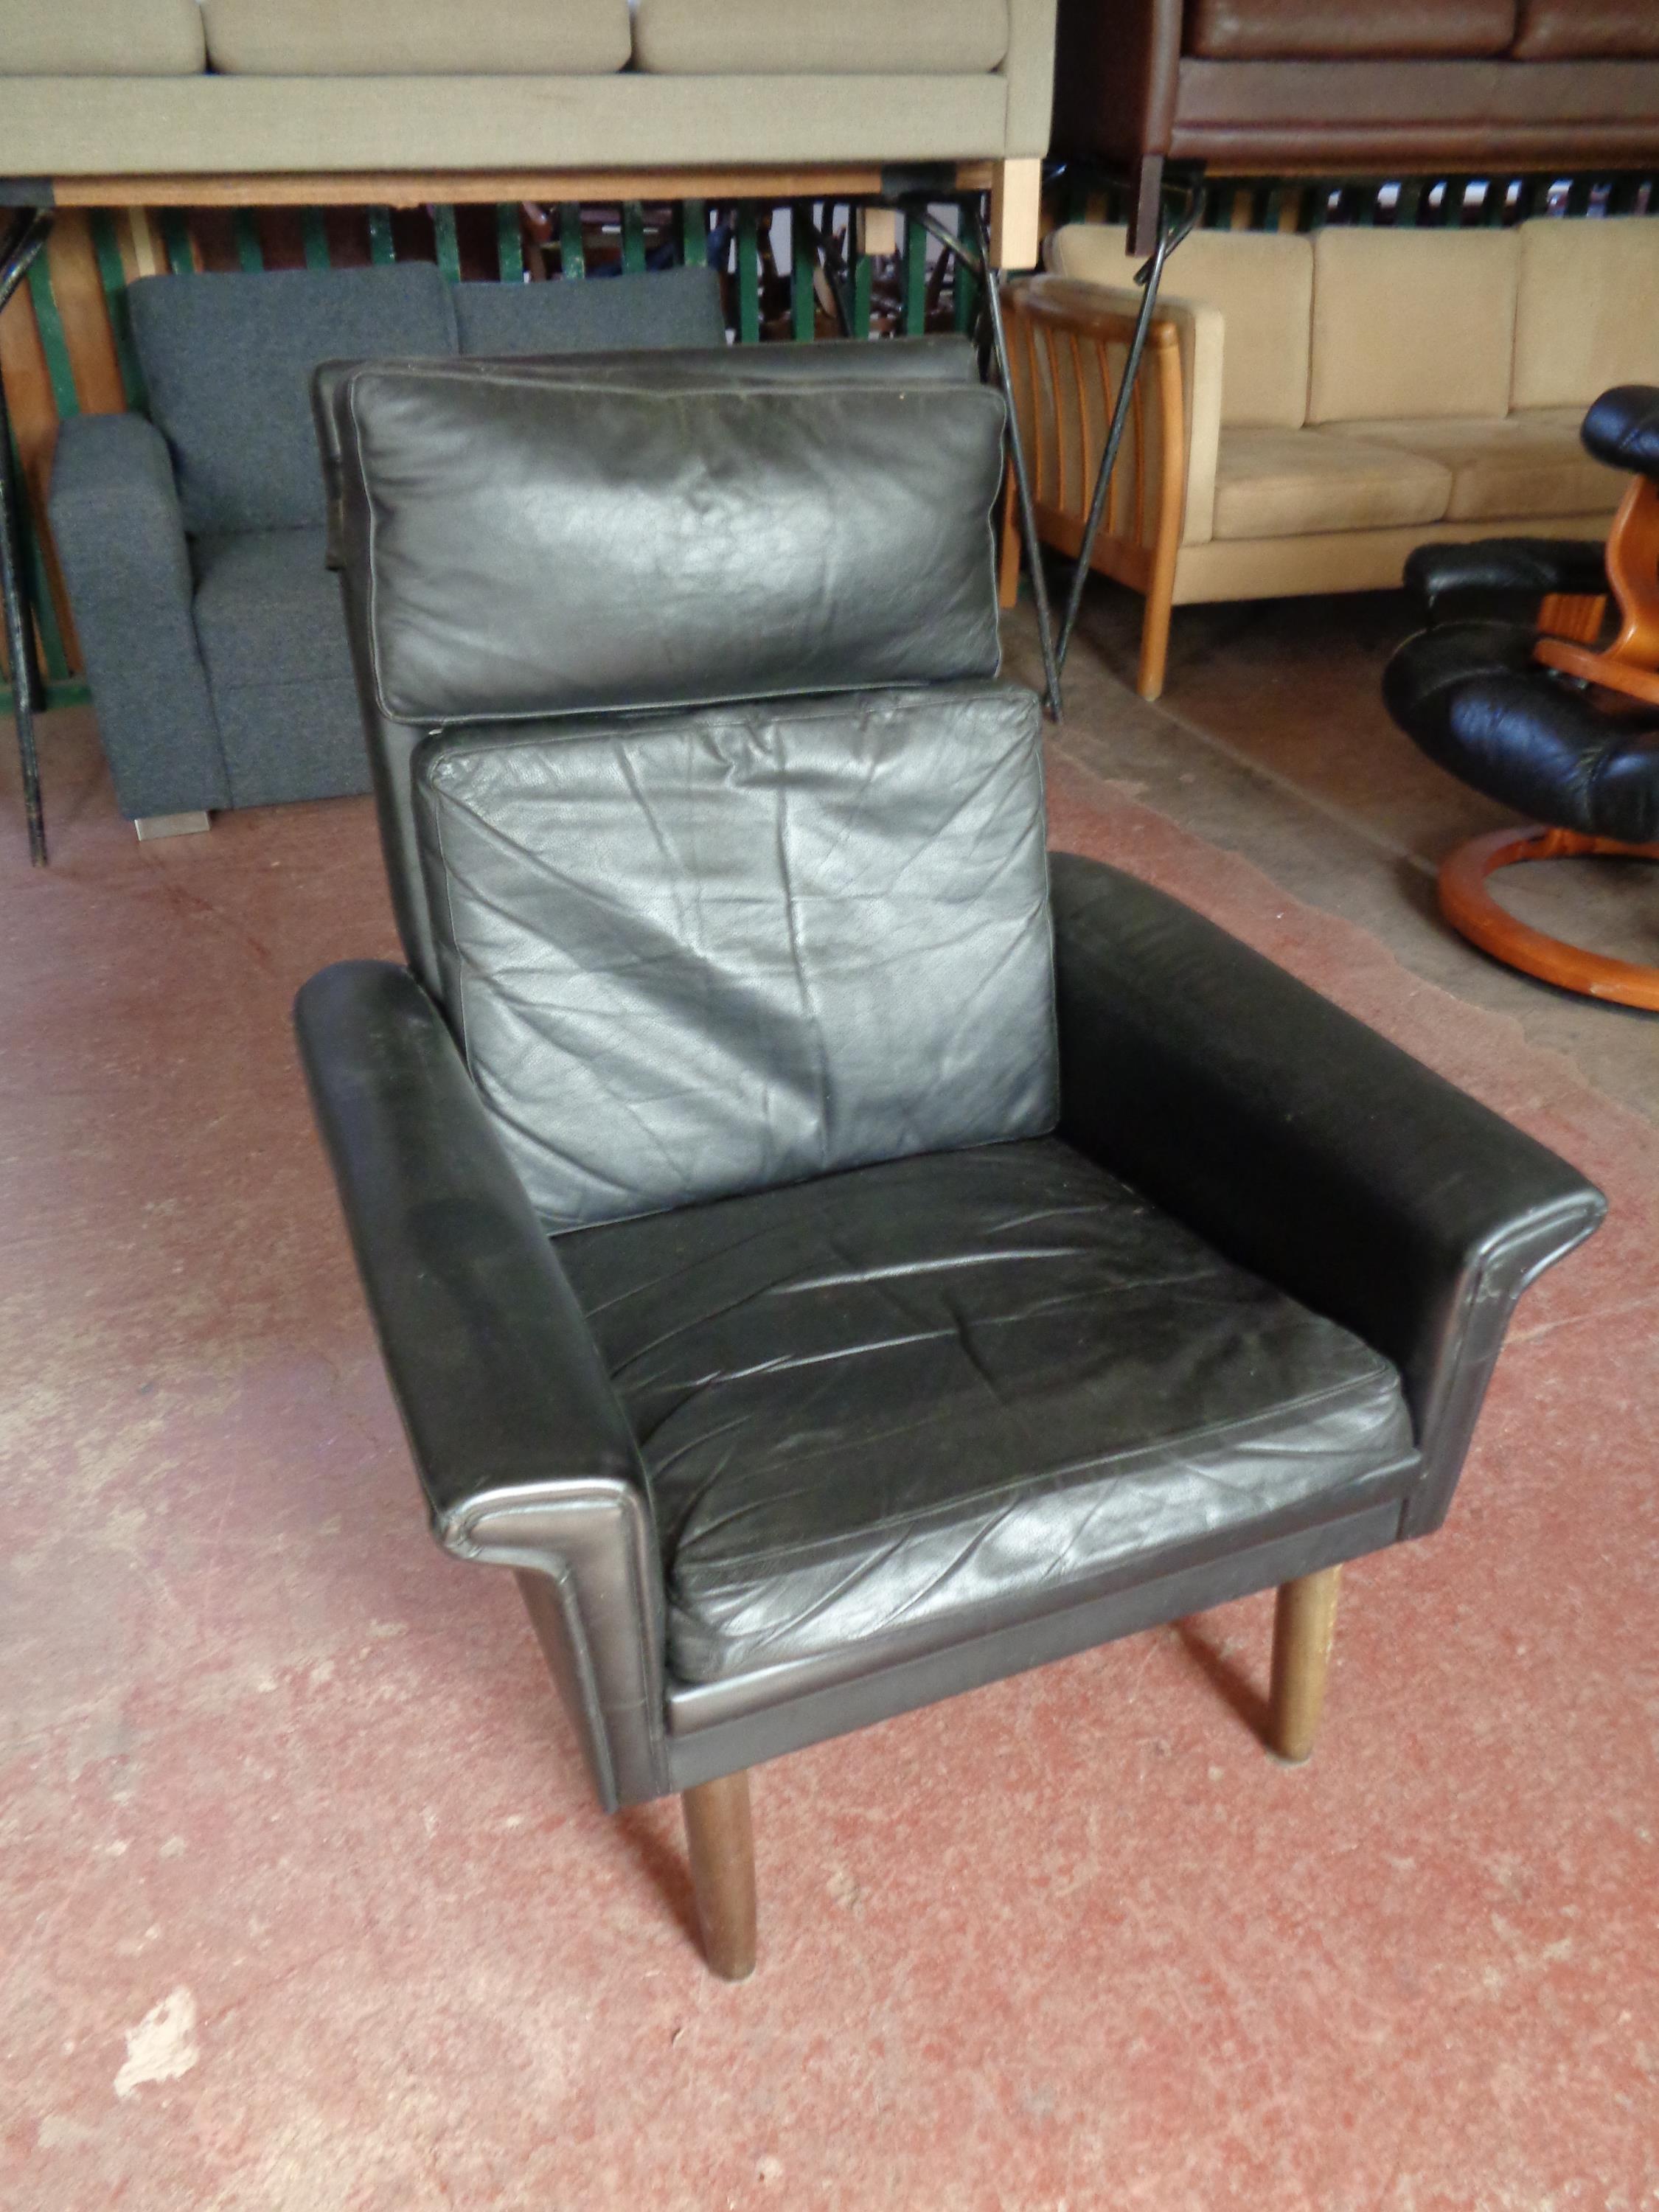 A mid century Danish black leather armchair